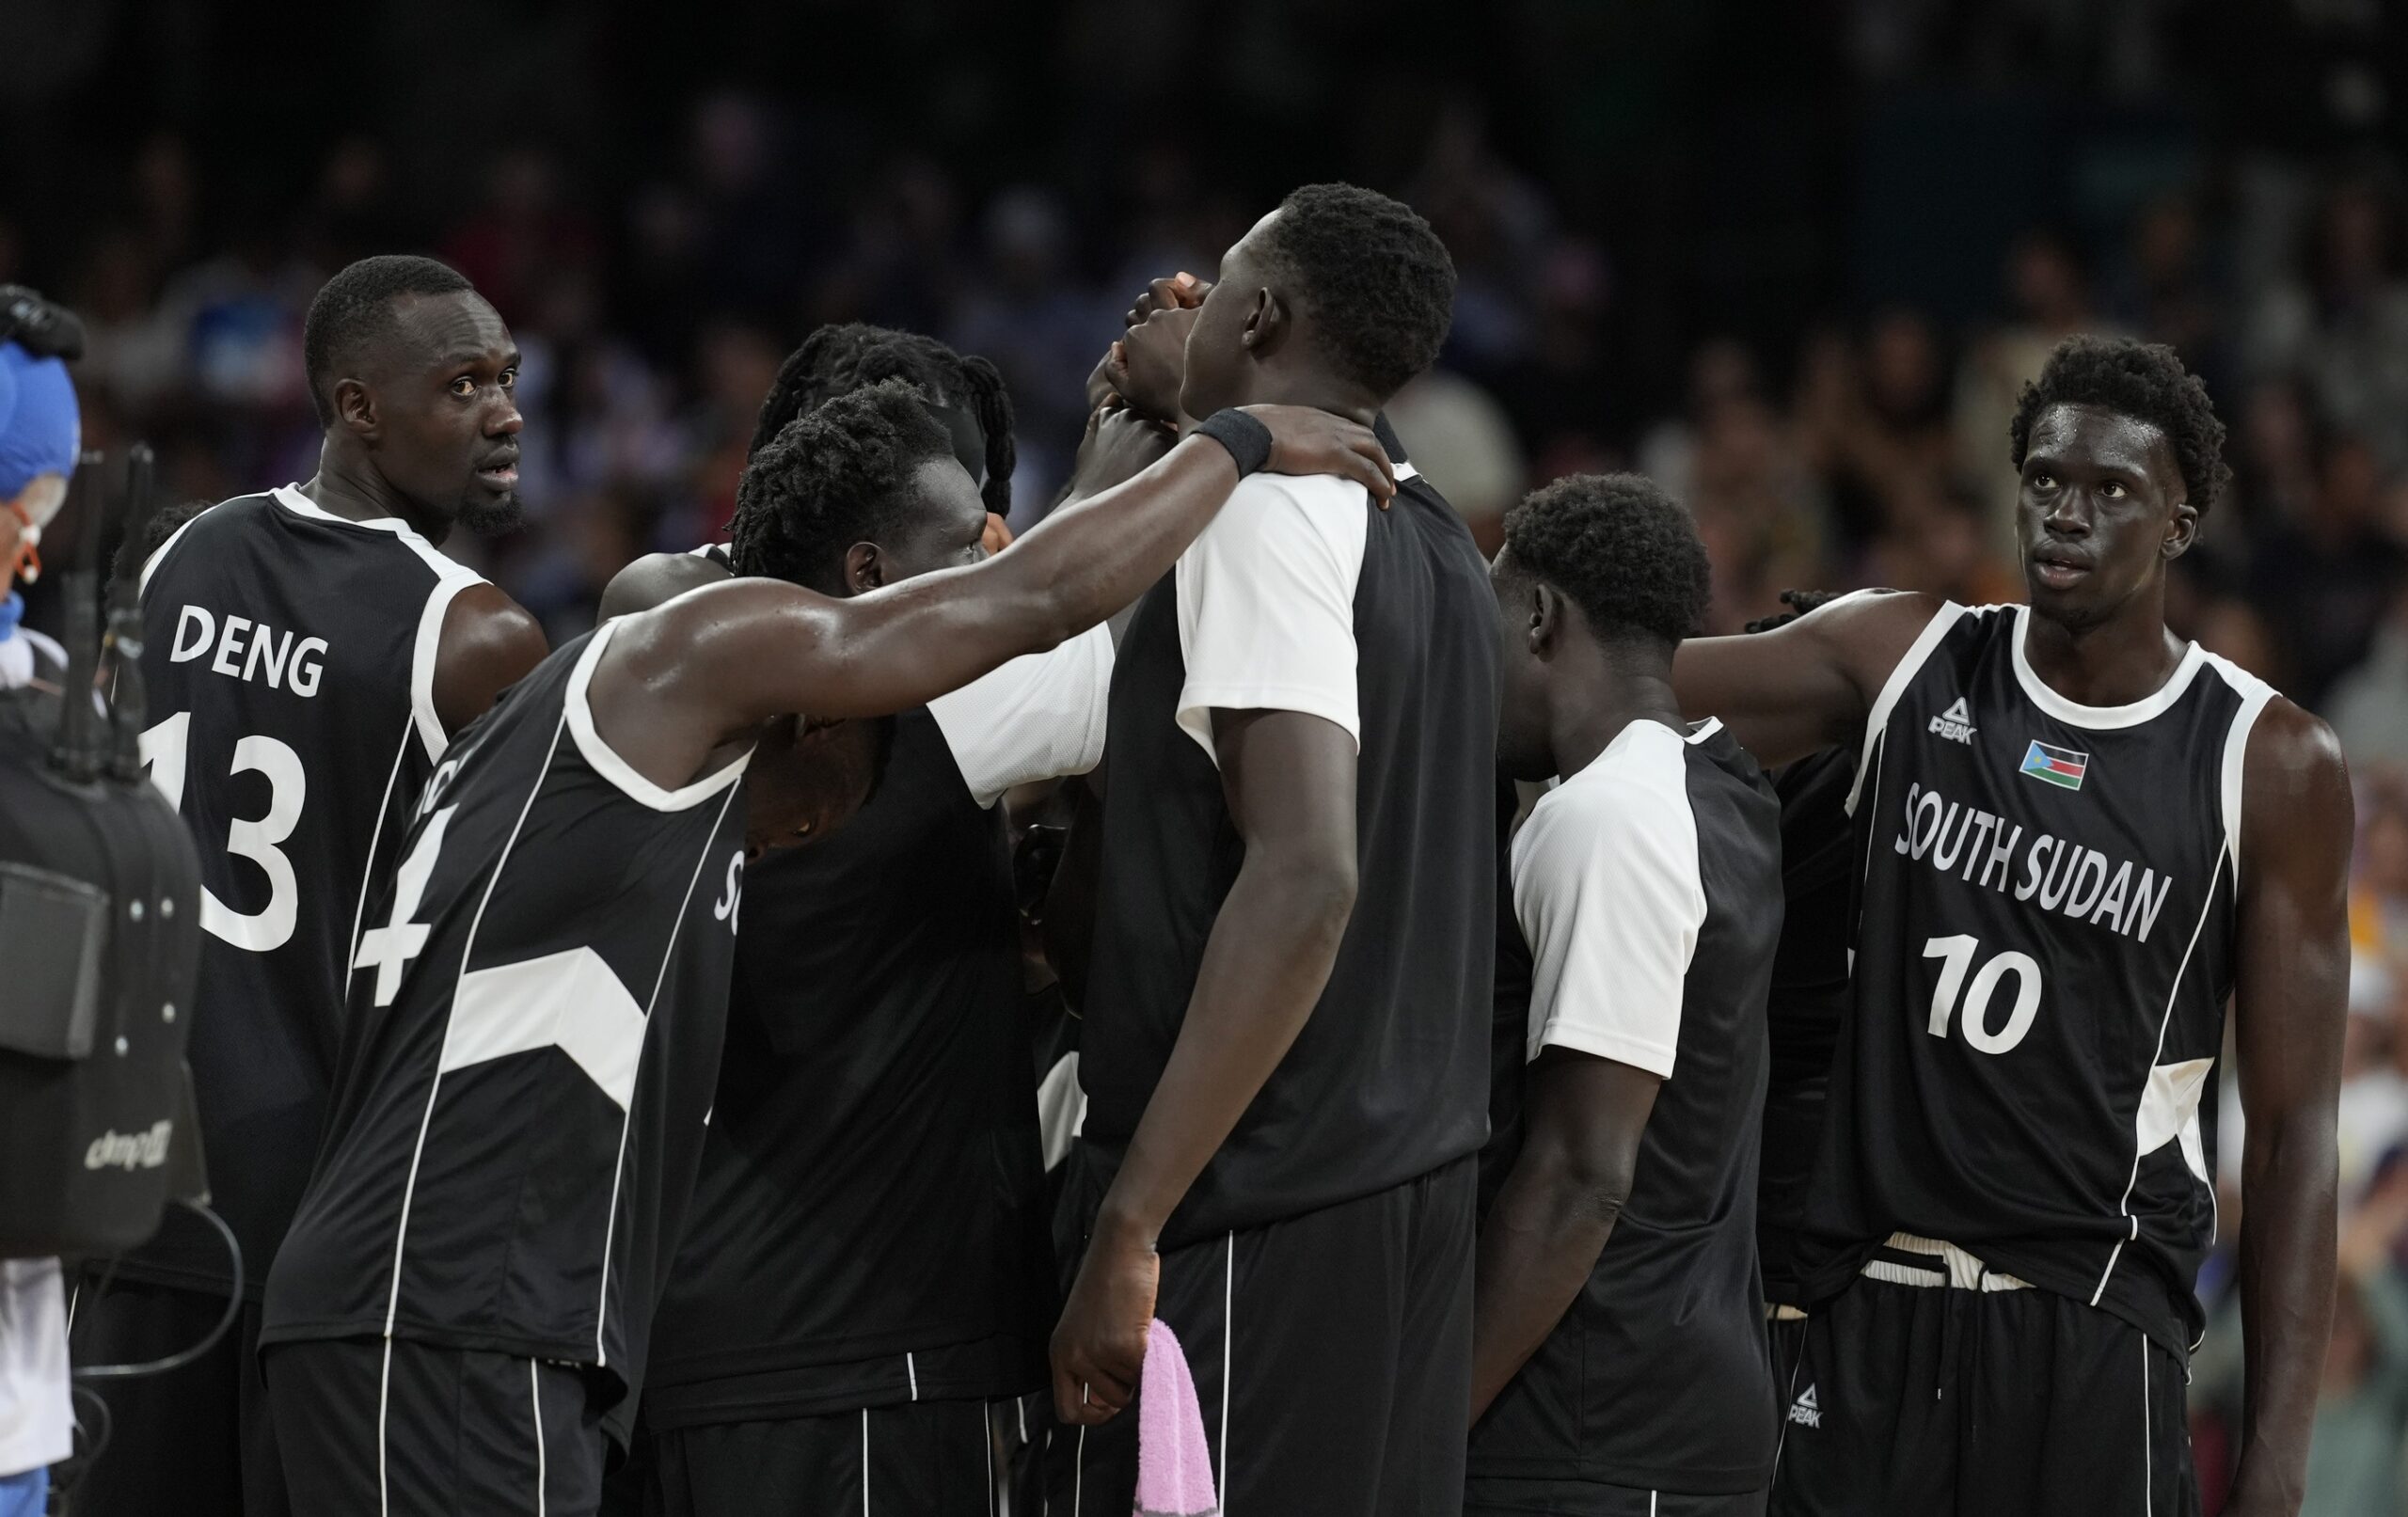 South Sudan Basketball players at Paris Olympics